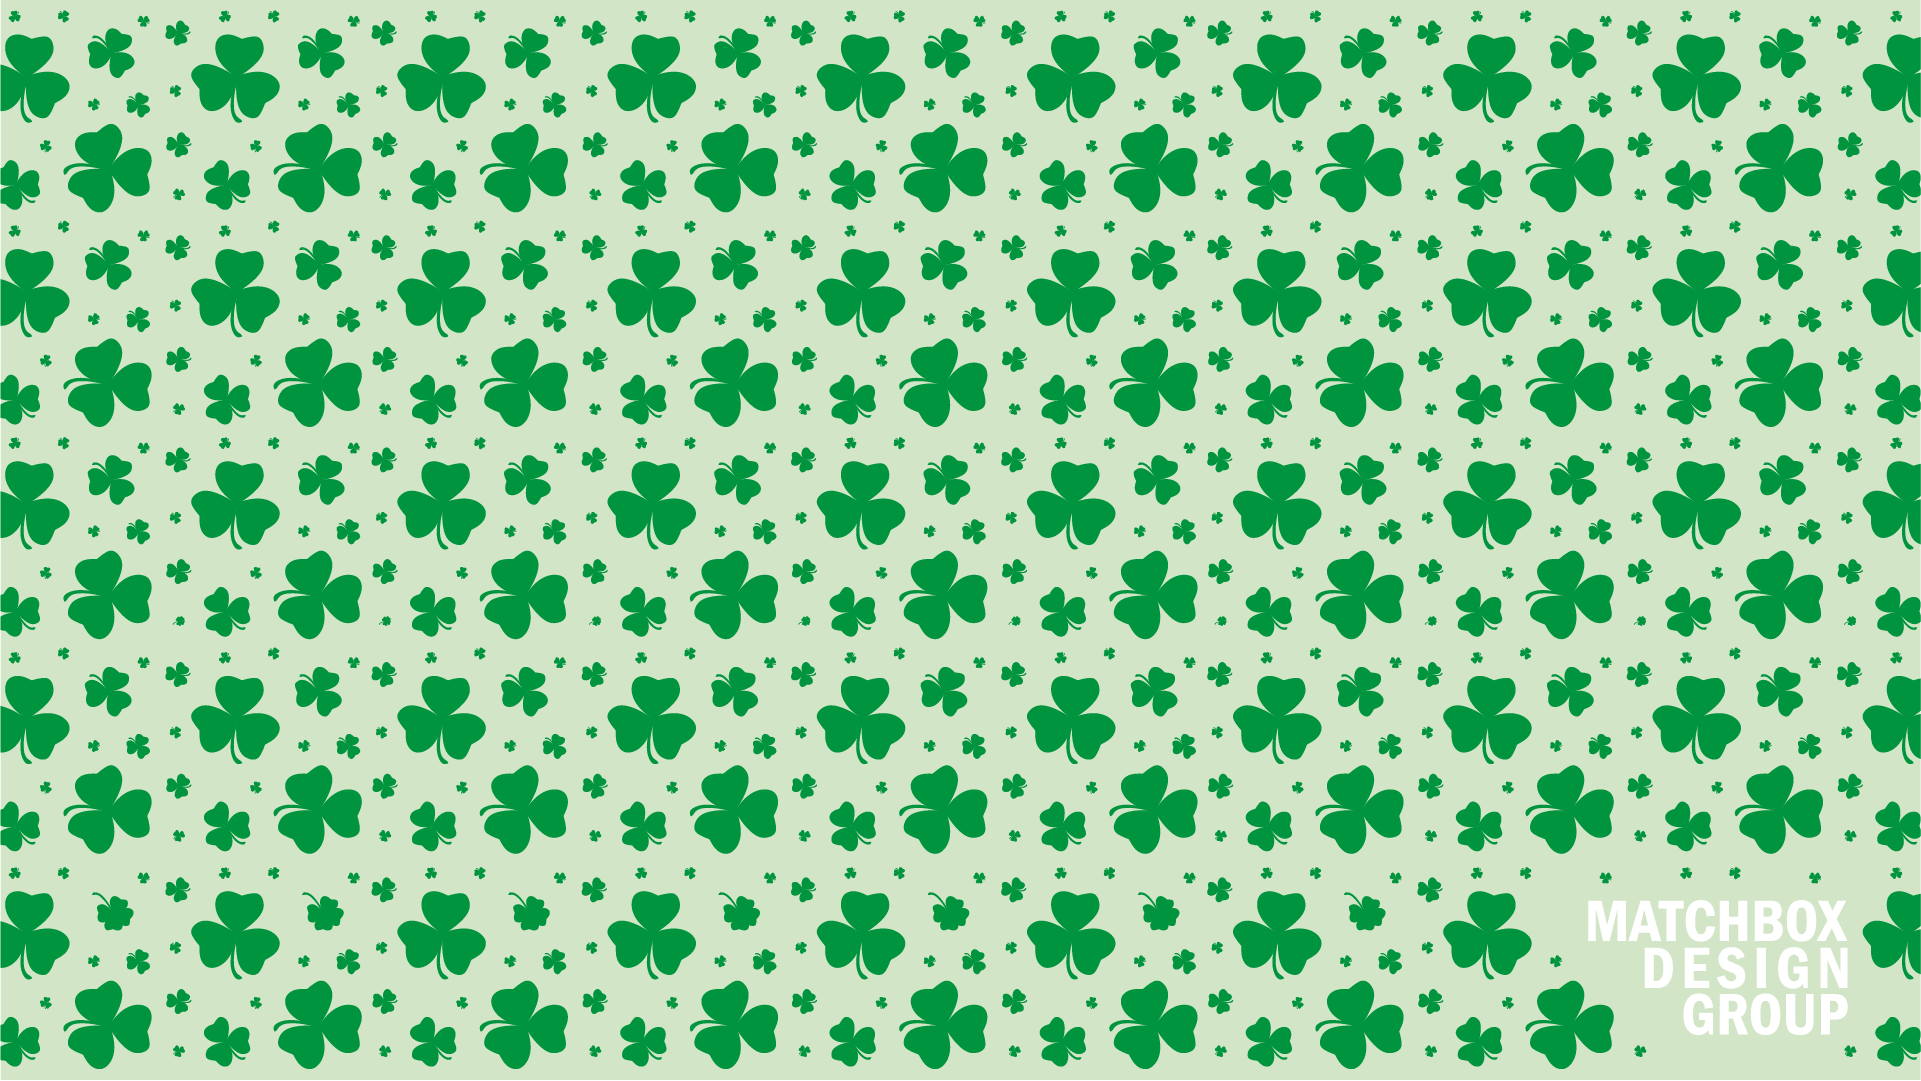 St. Patrick's Day Wallpaper. Matchbox Design Group. St. Louis, MO